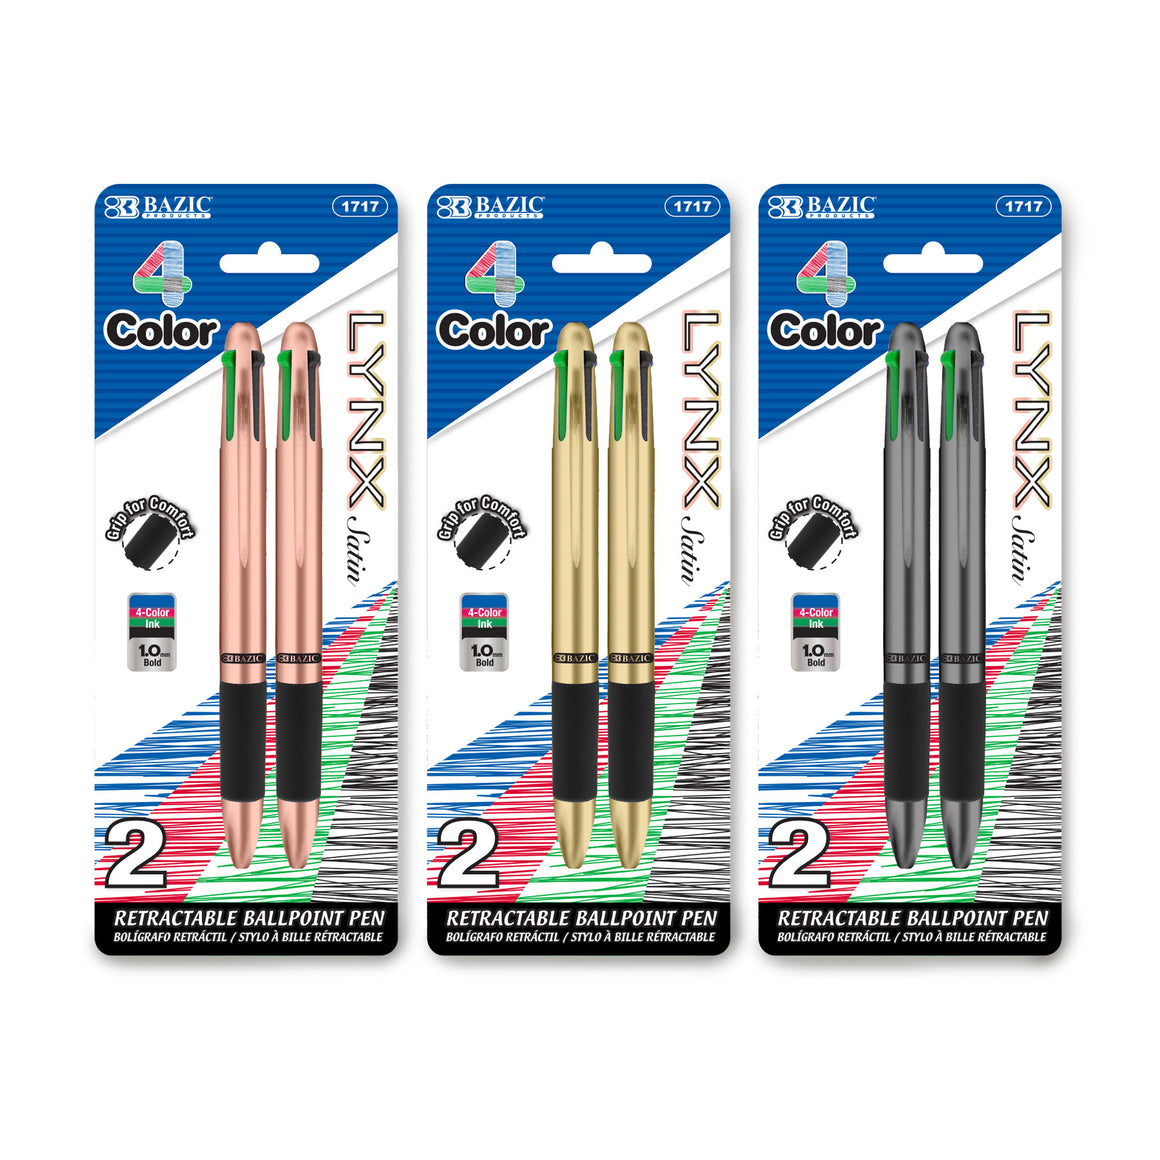 Satin Top 4-Color Pen w/ Cushion Grip (2/Pack)